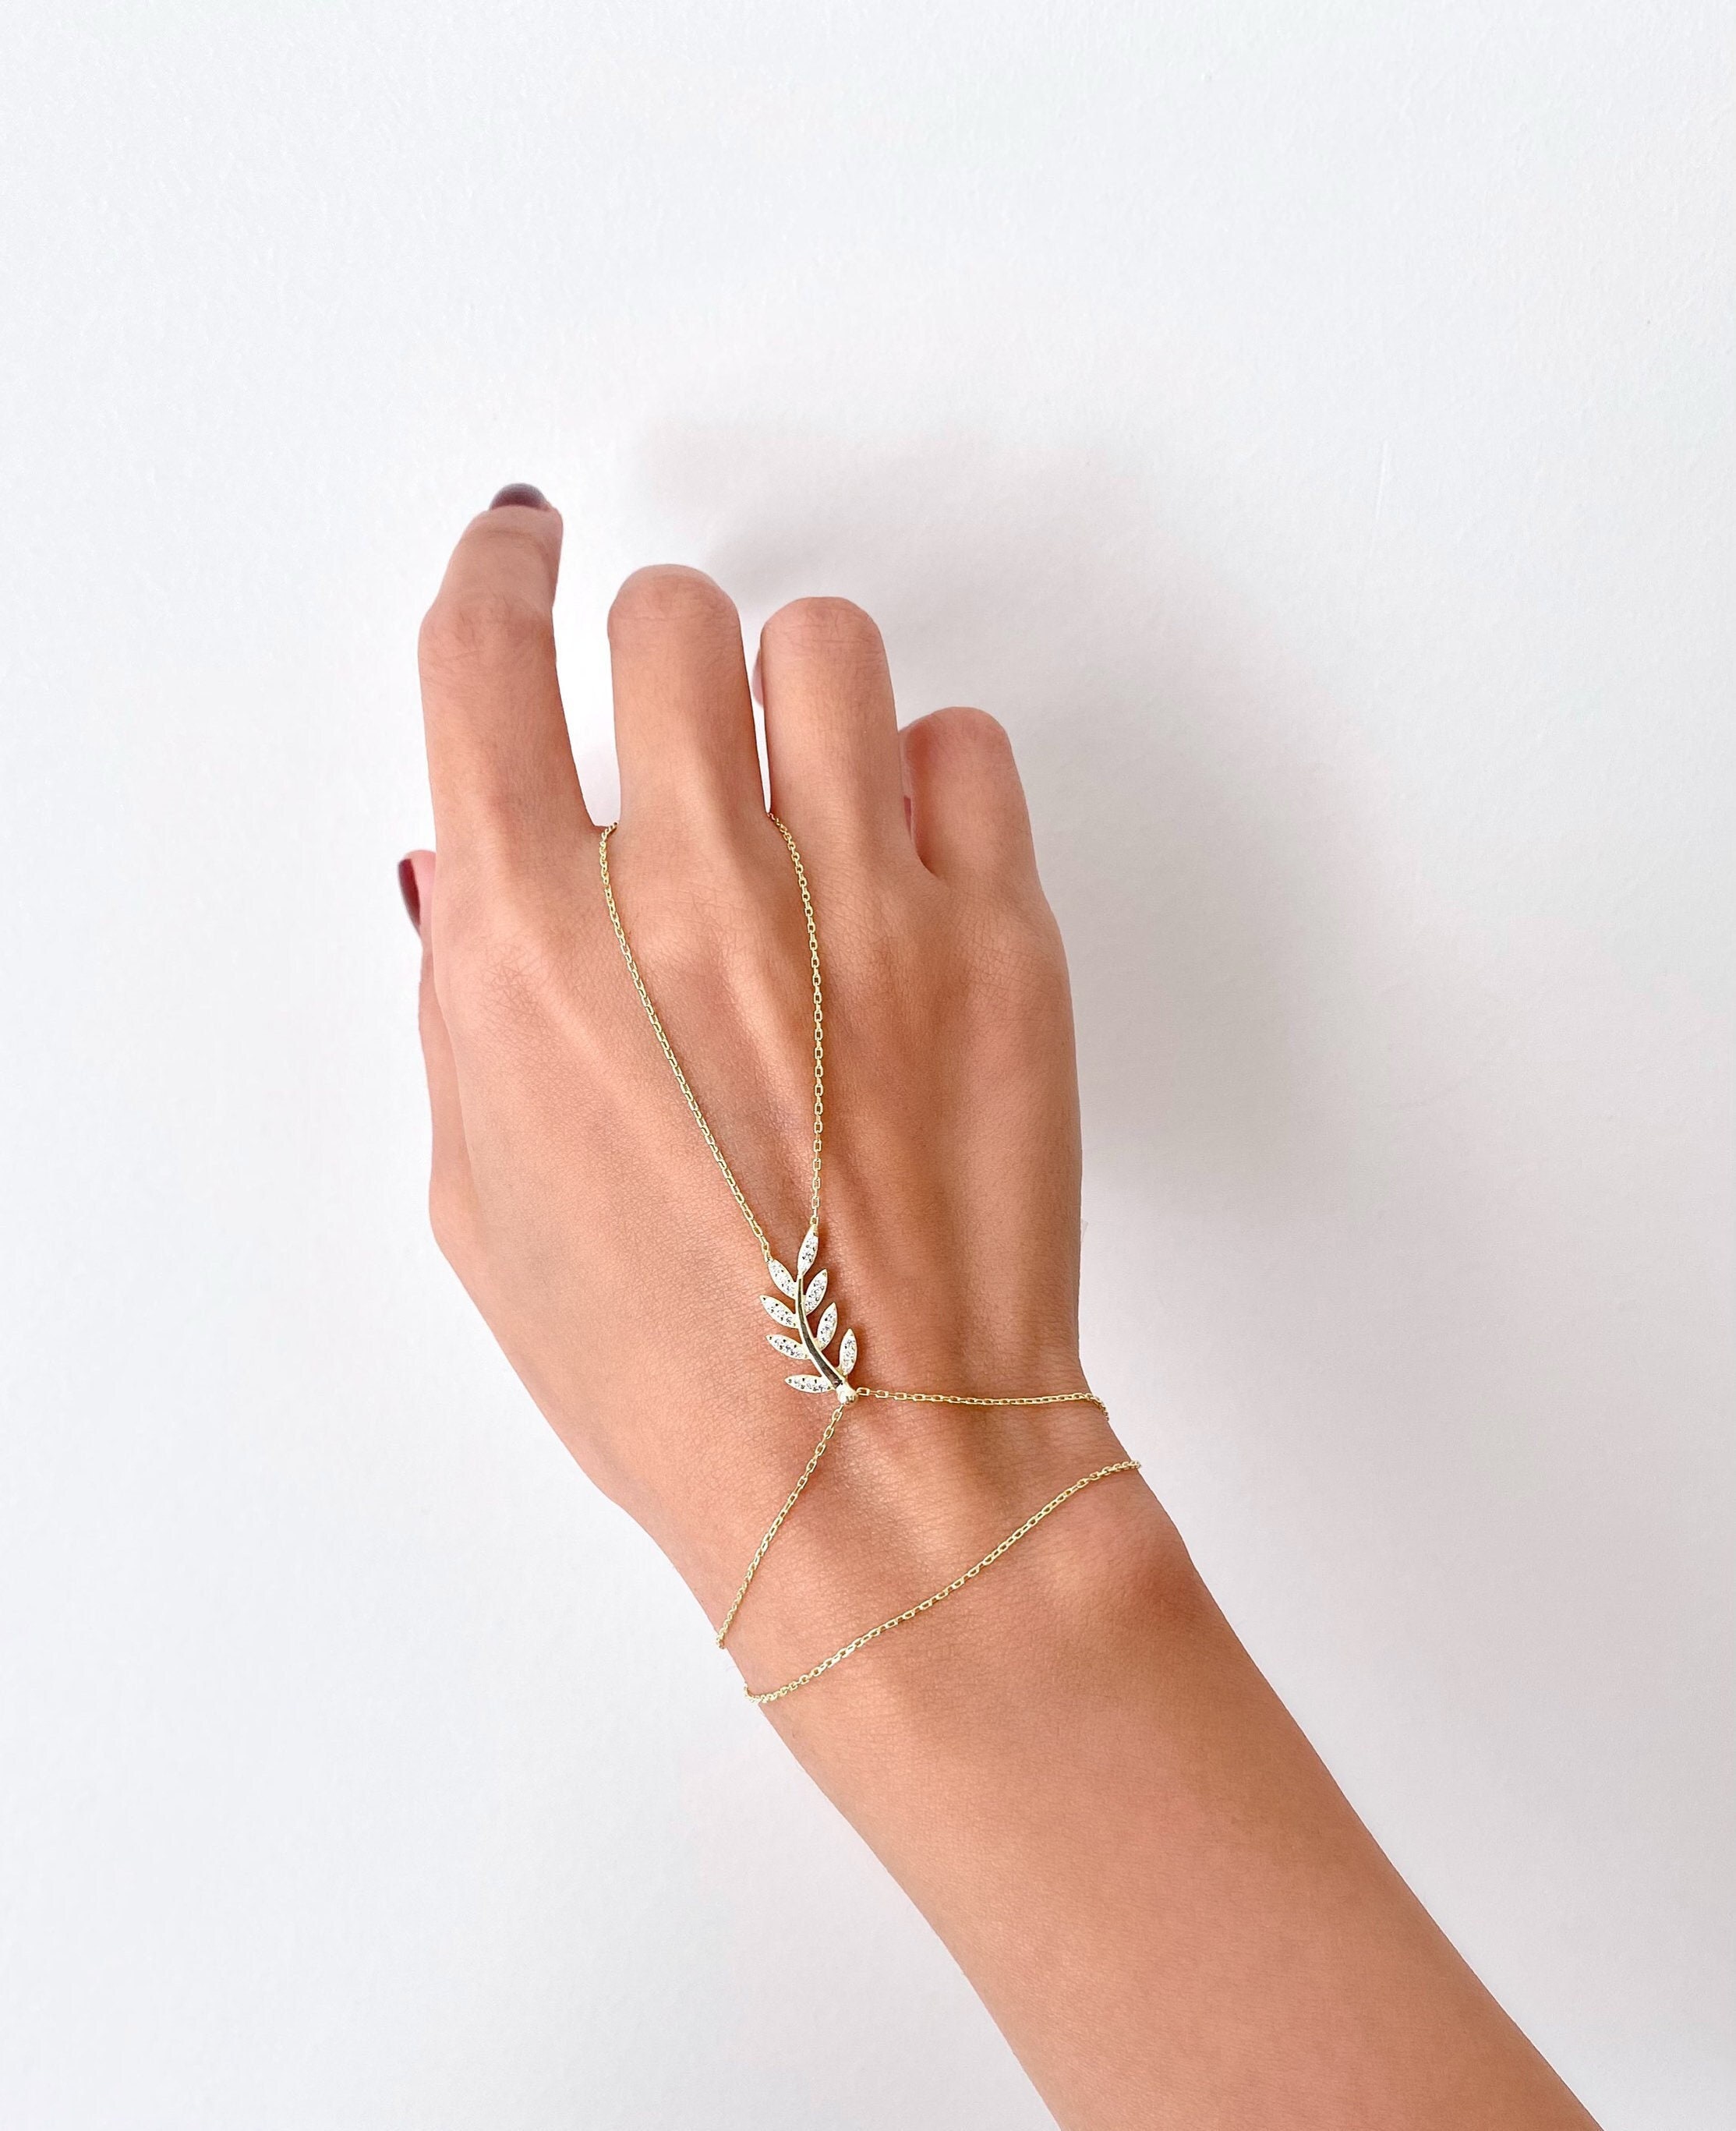 Hand Bracelet Holder Decorative Hand Jewelry Holder for Hand Chain Finger Up